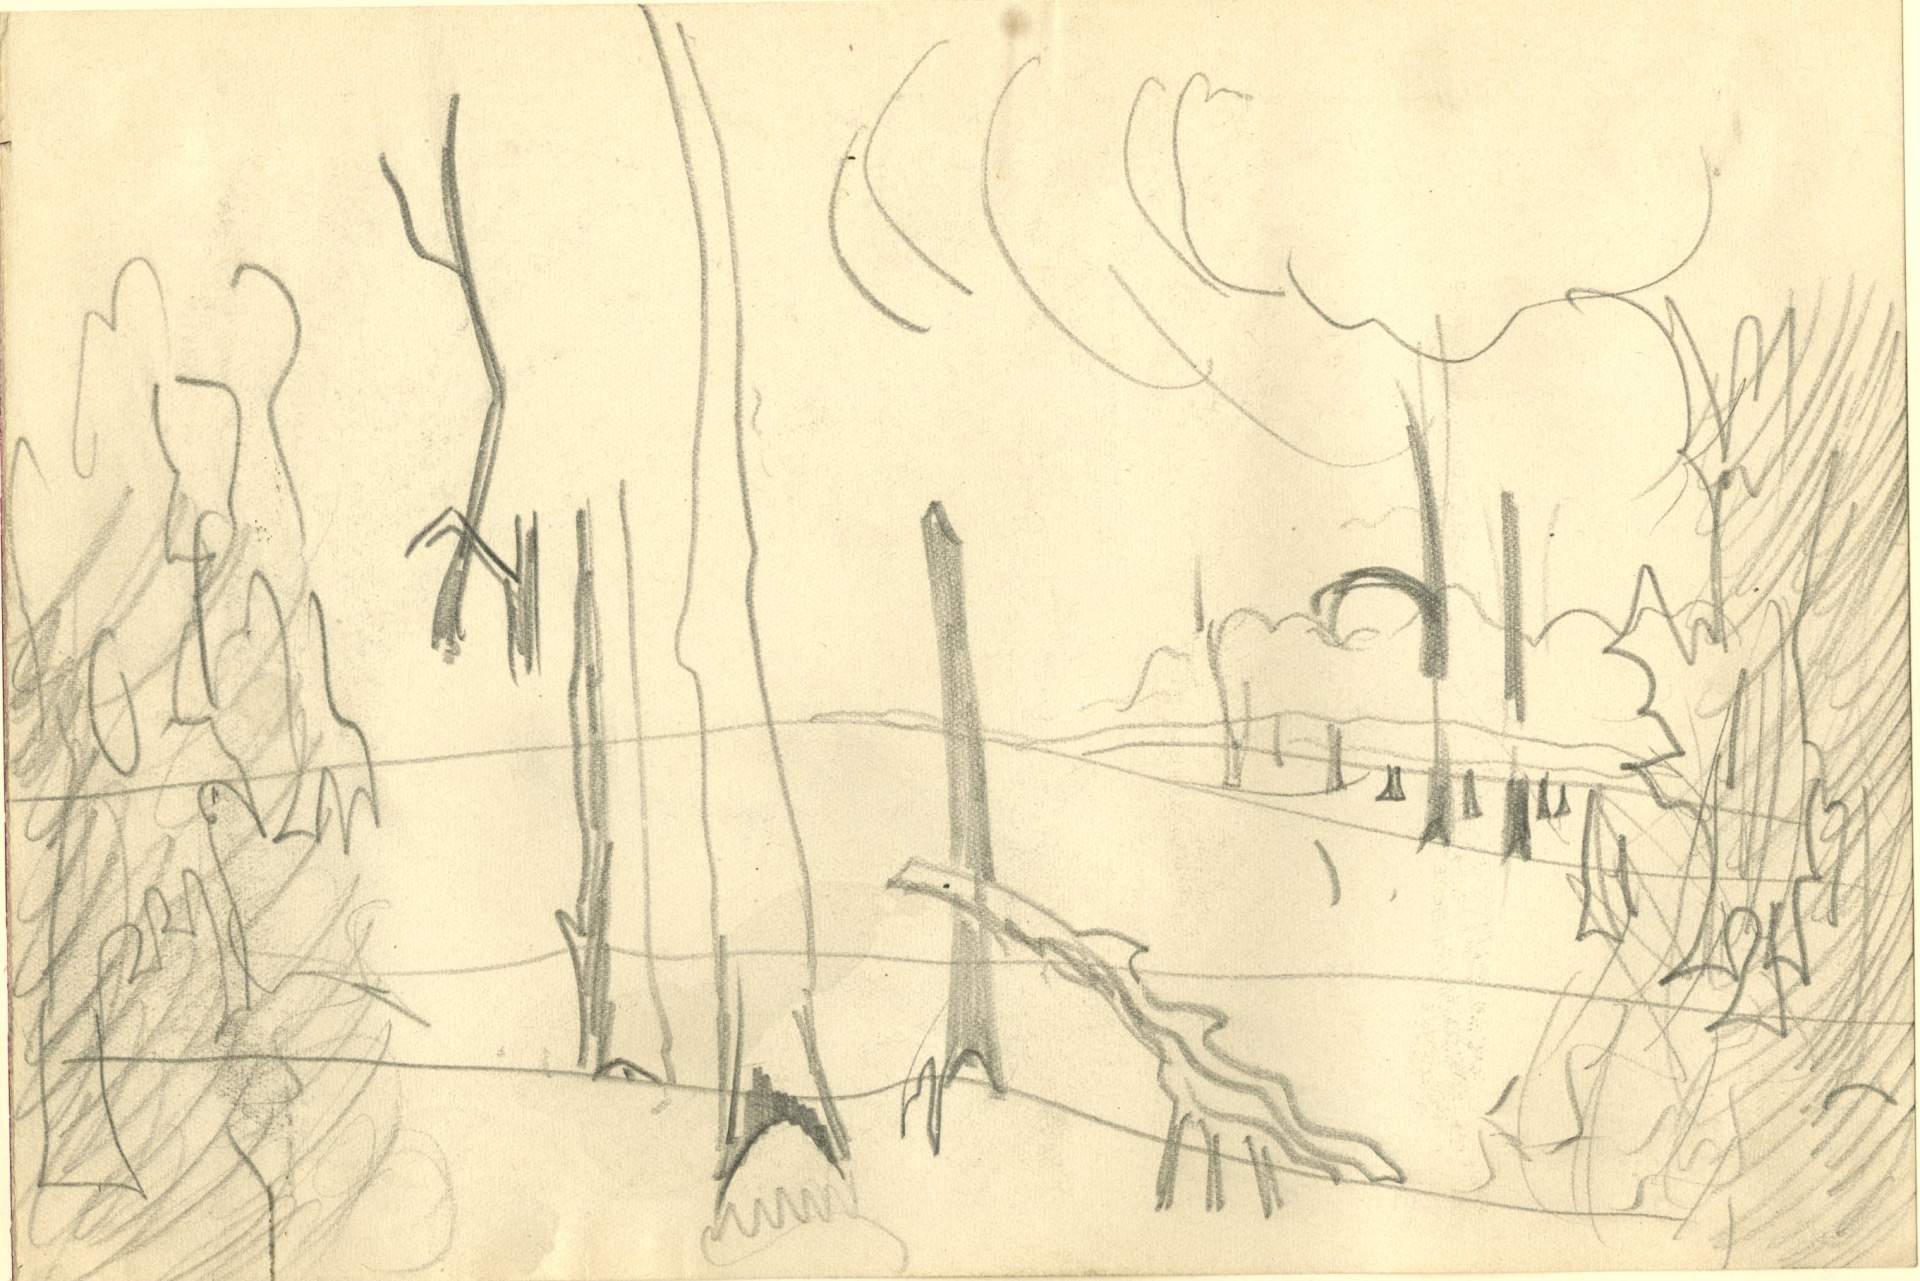 Sketch of trees in landscape